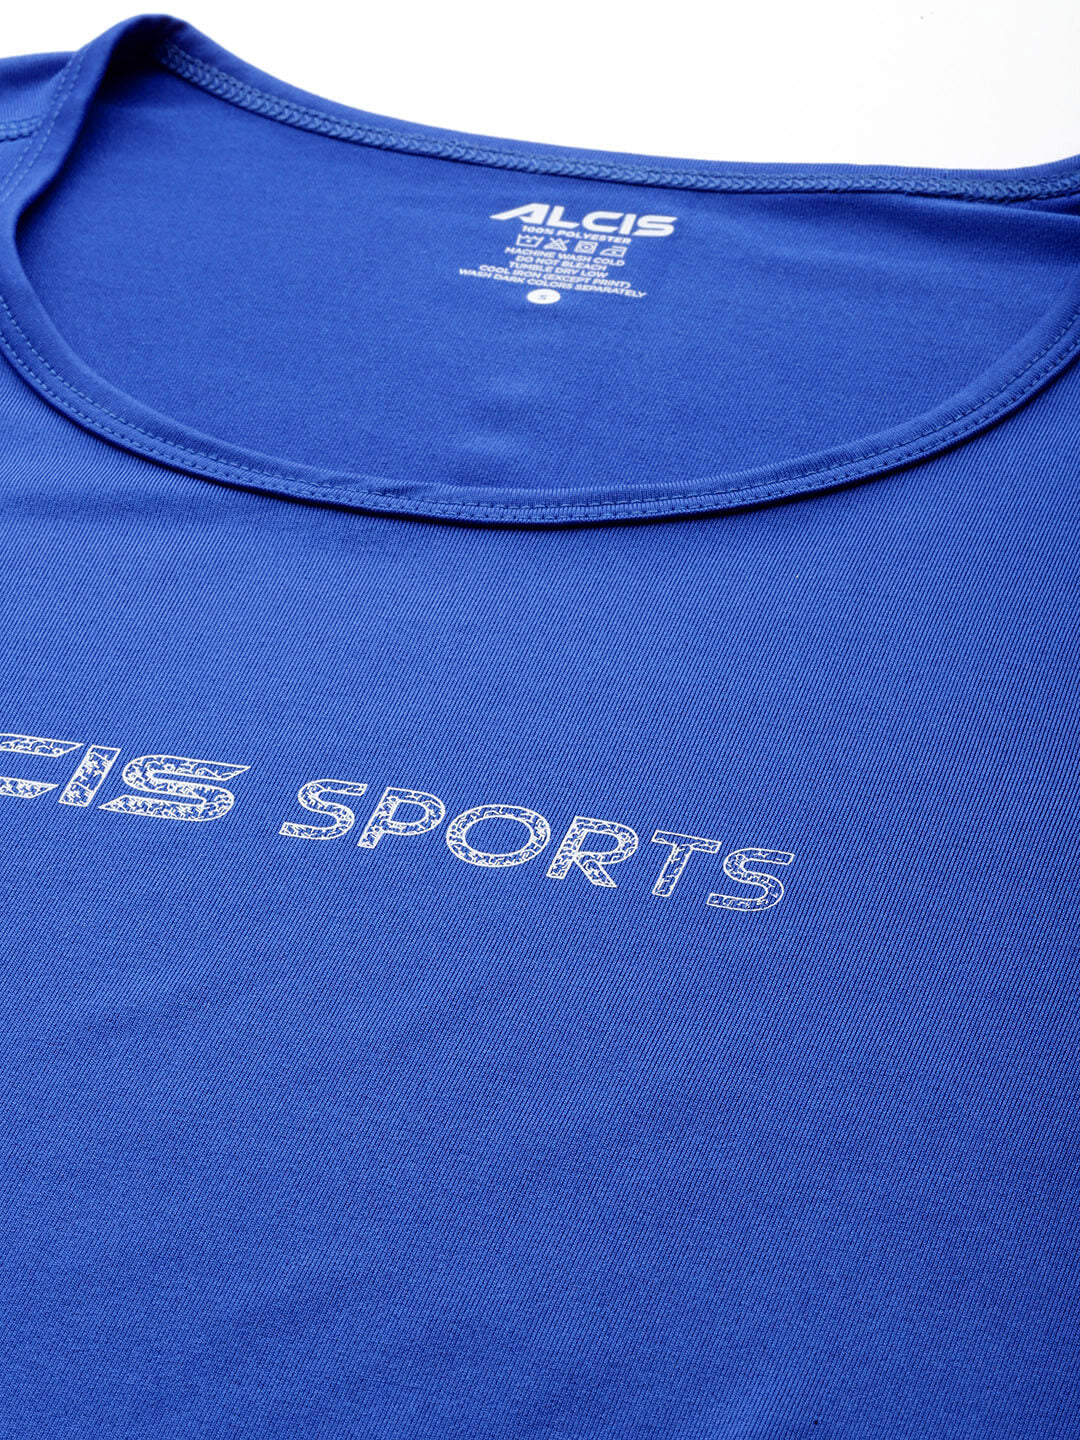 Alcis Typography Printed Anti Static Slim Fit Sports T-shirt